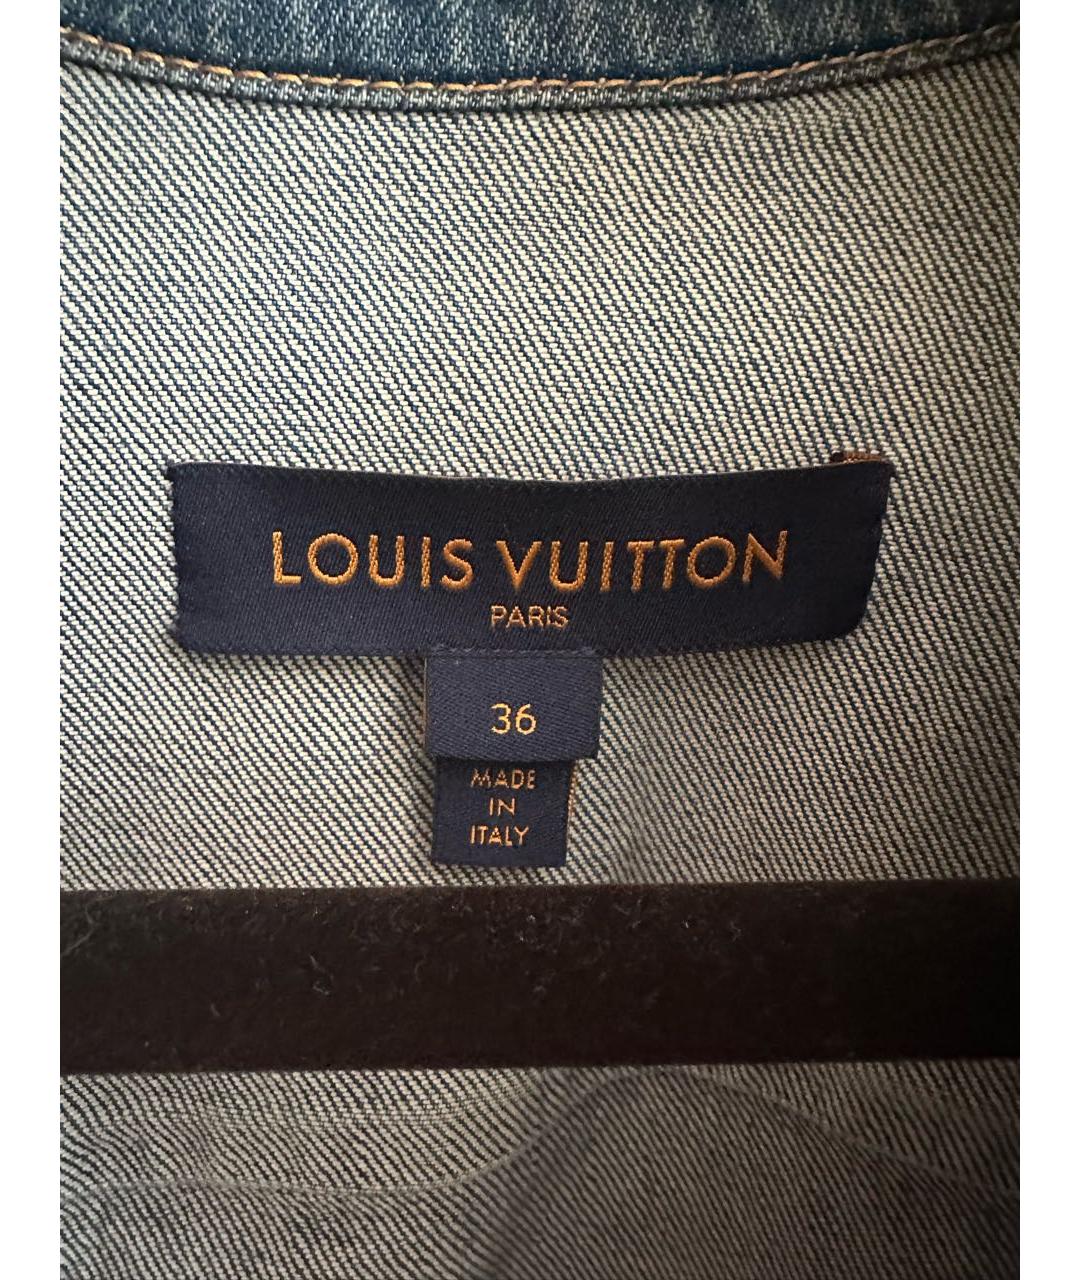 LOUIS VUITTON PRE-OWNED Синий деним жакет/пиджак, фото 3